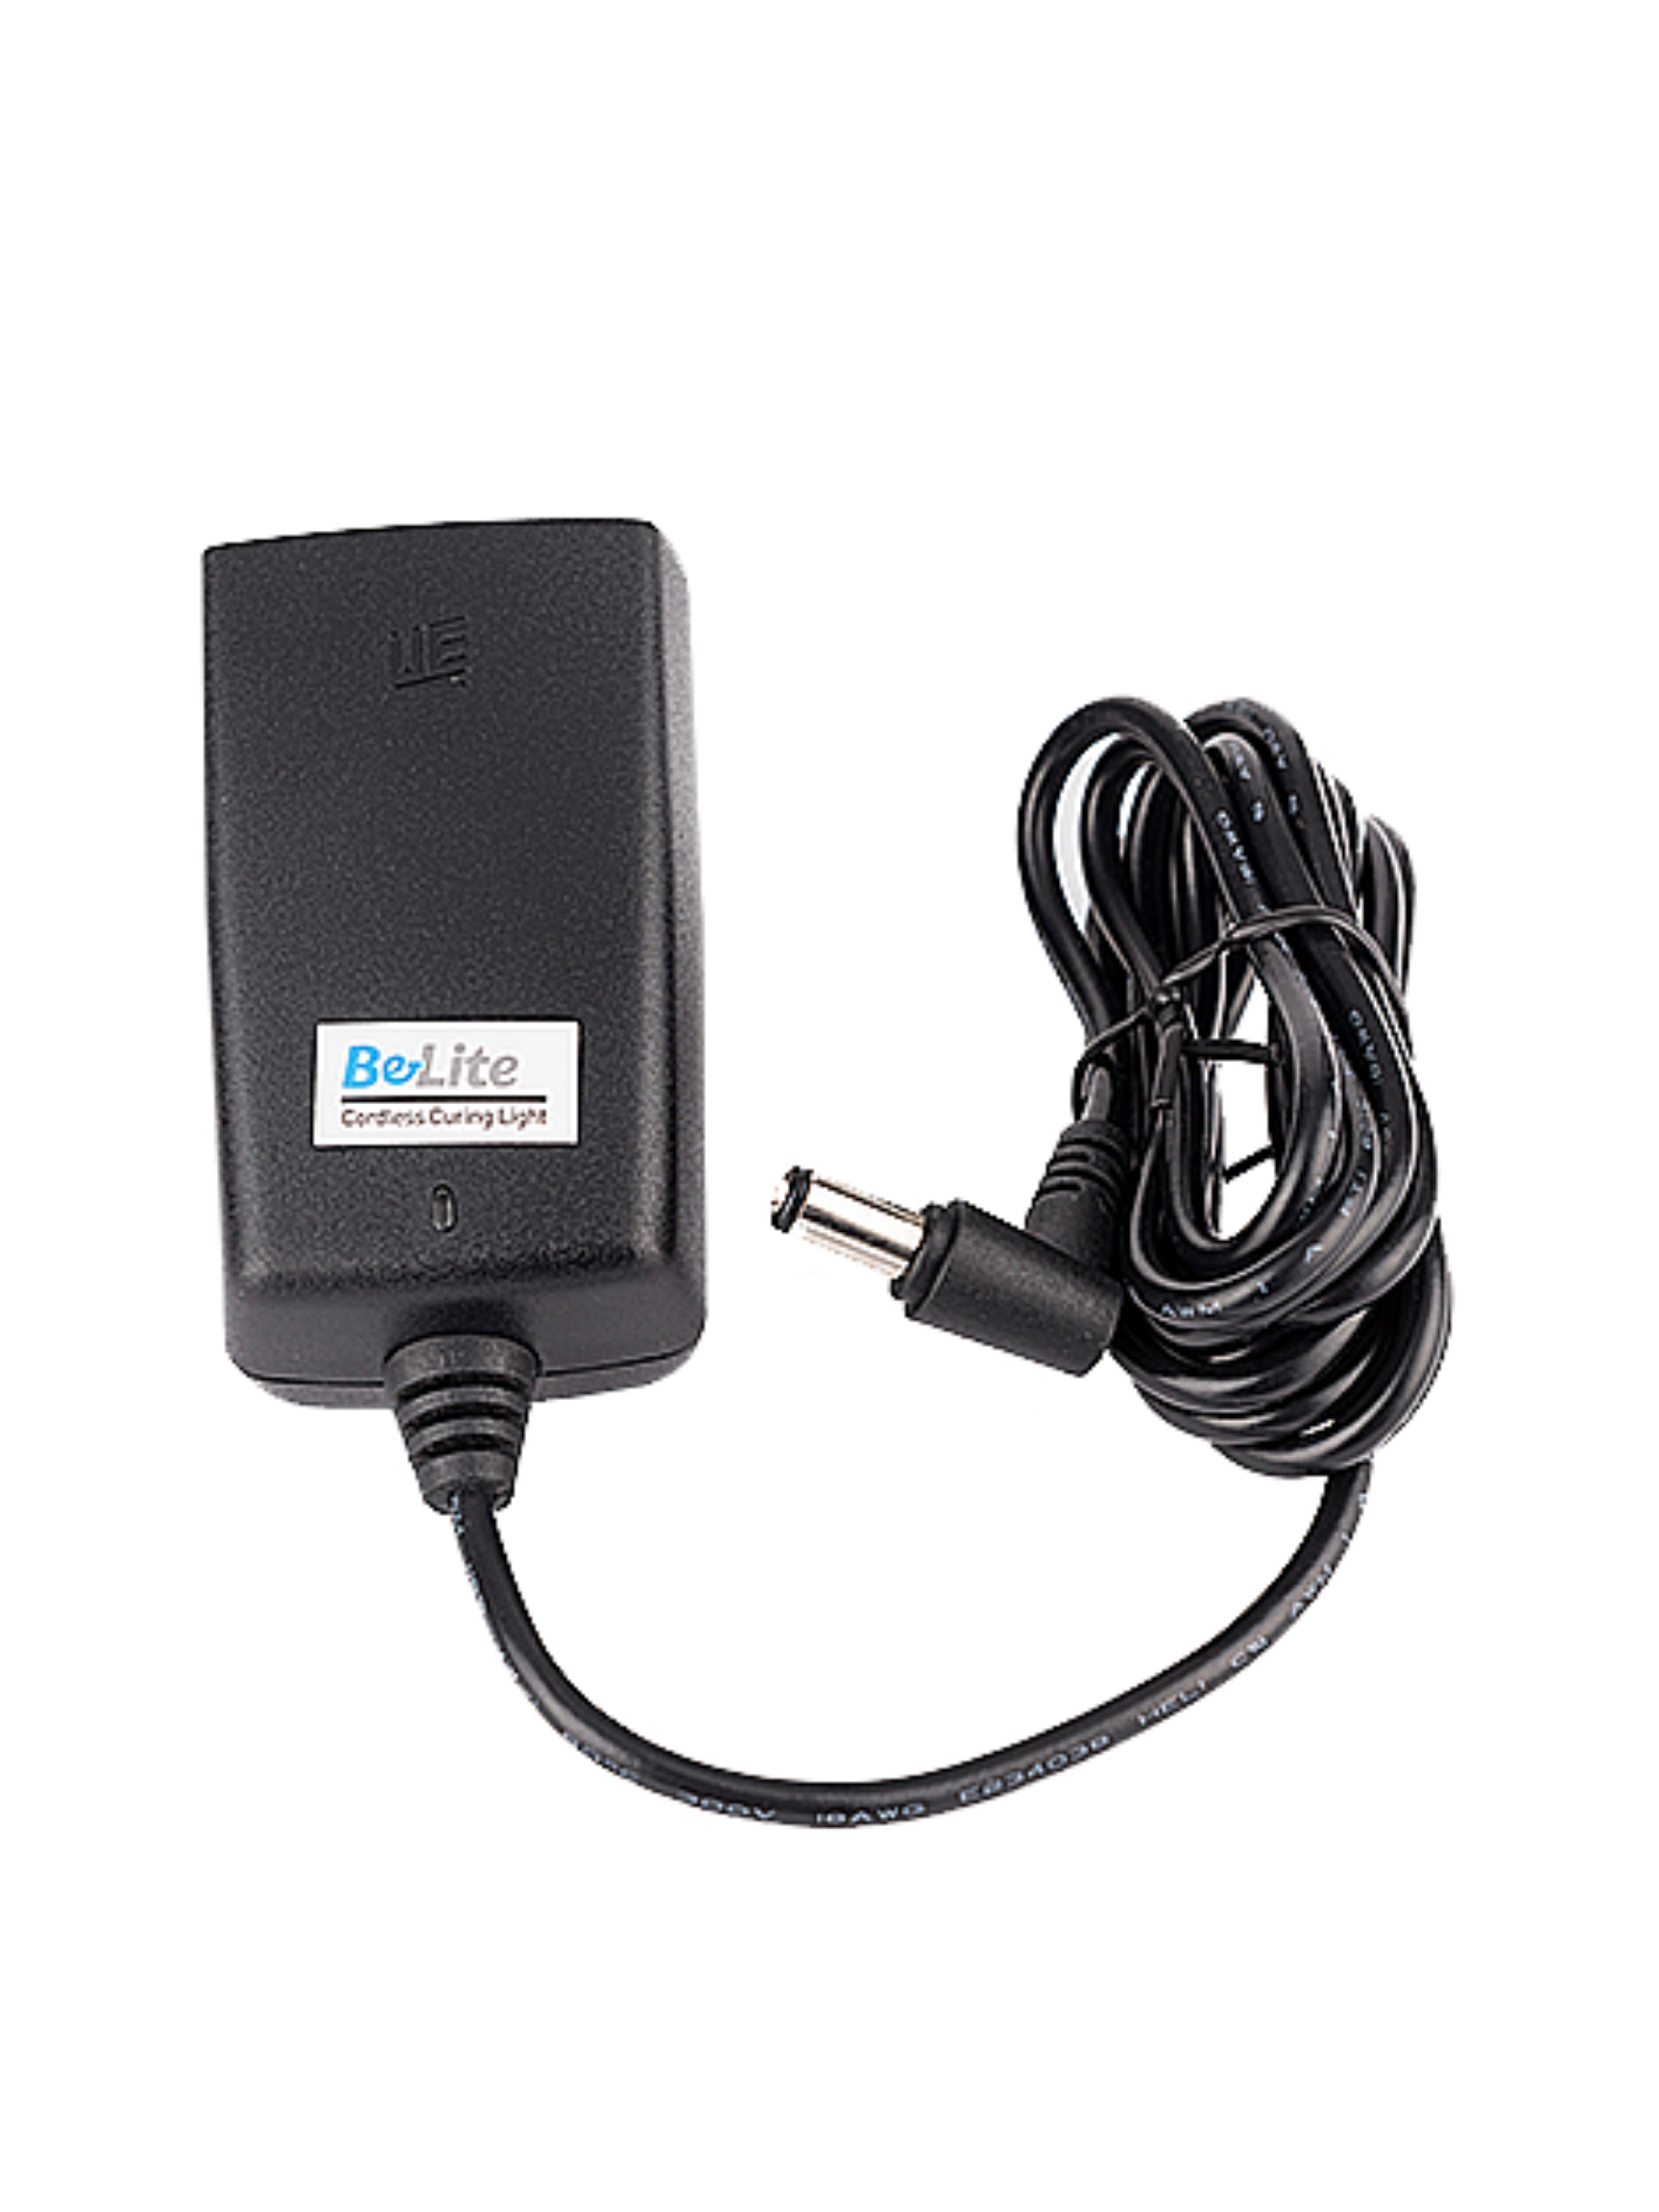 B&Lite AC Power Adaptor (Retail)